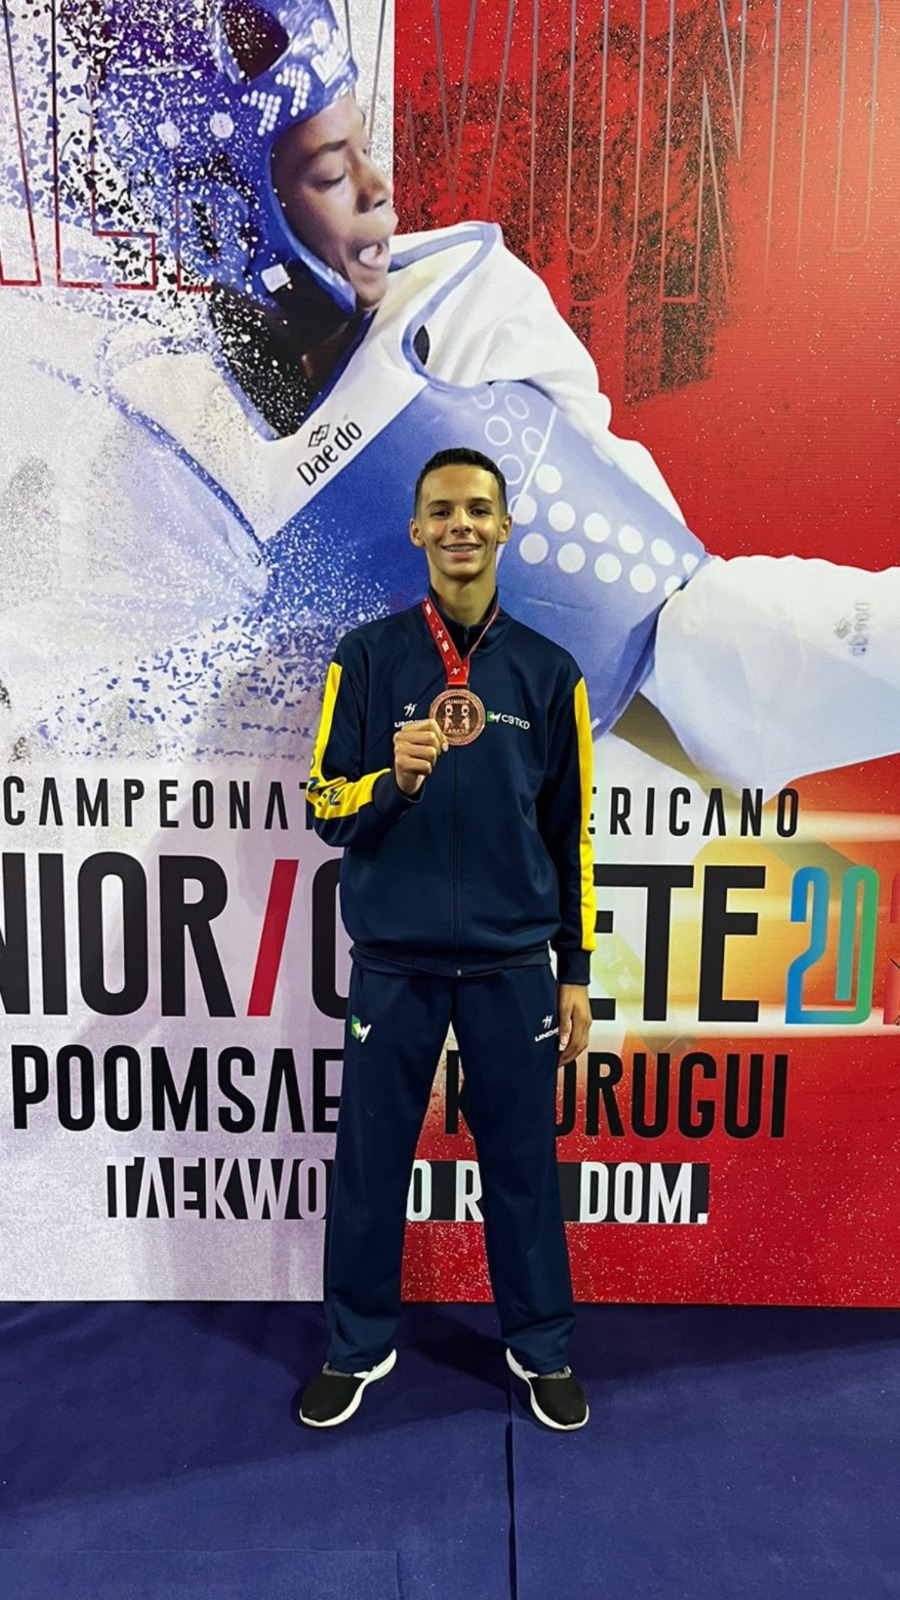 CTE-UFMG: Darlan Resende garante medalha no Campeonato Pan-Americano de Taekwondo e vai disputar o Mundial na Bósnia